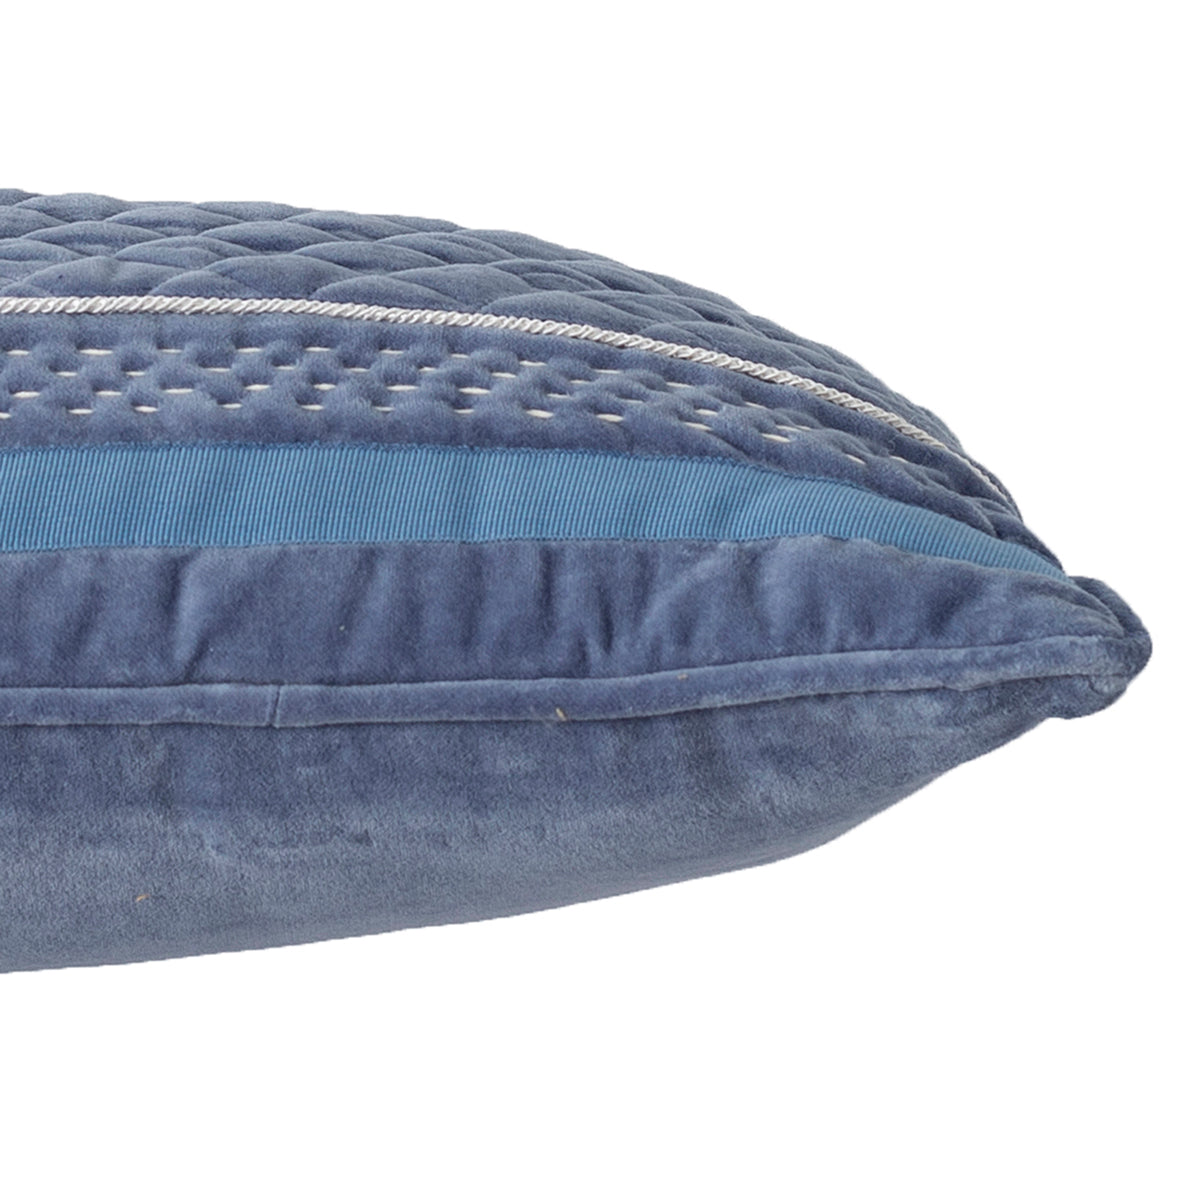 Grandeur Vintgem Hand Embridery 100% Cotton Blue Cushion Cover